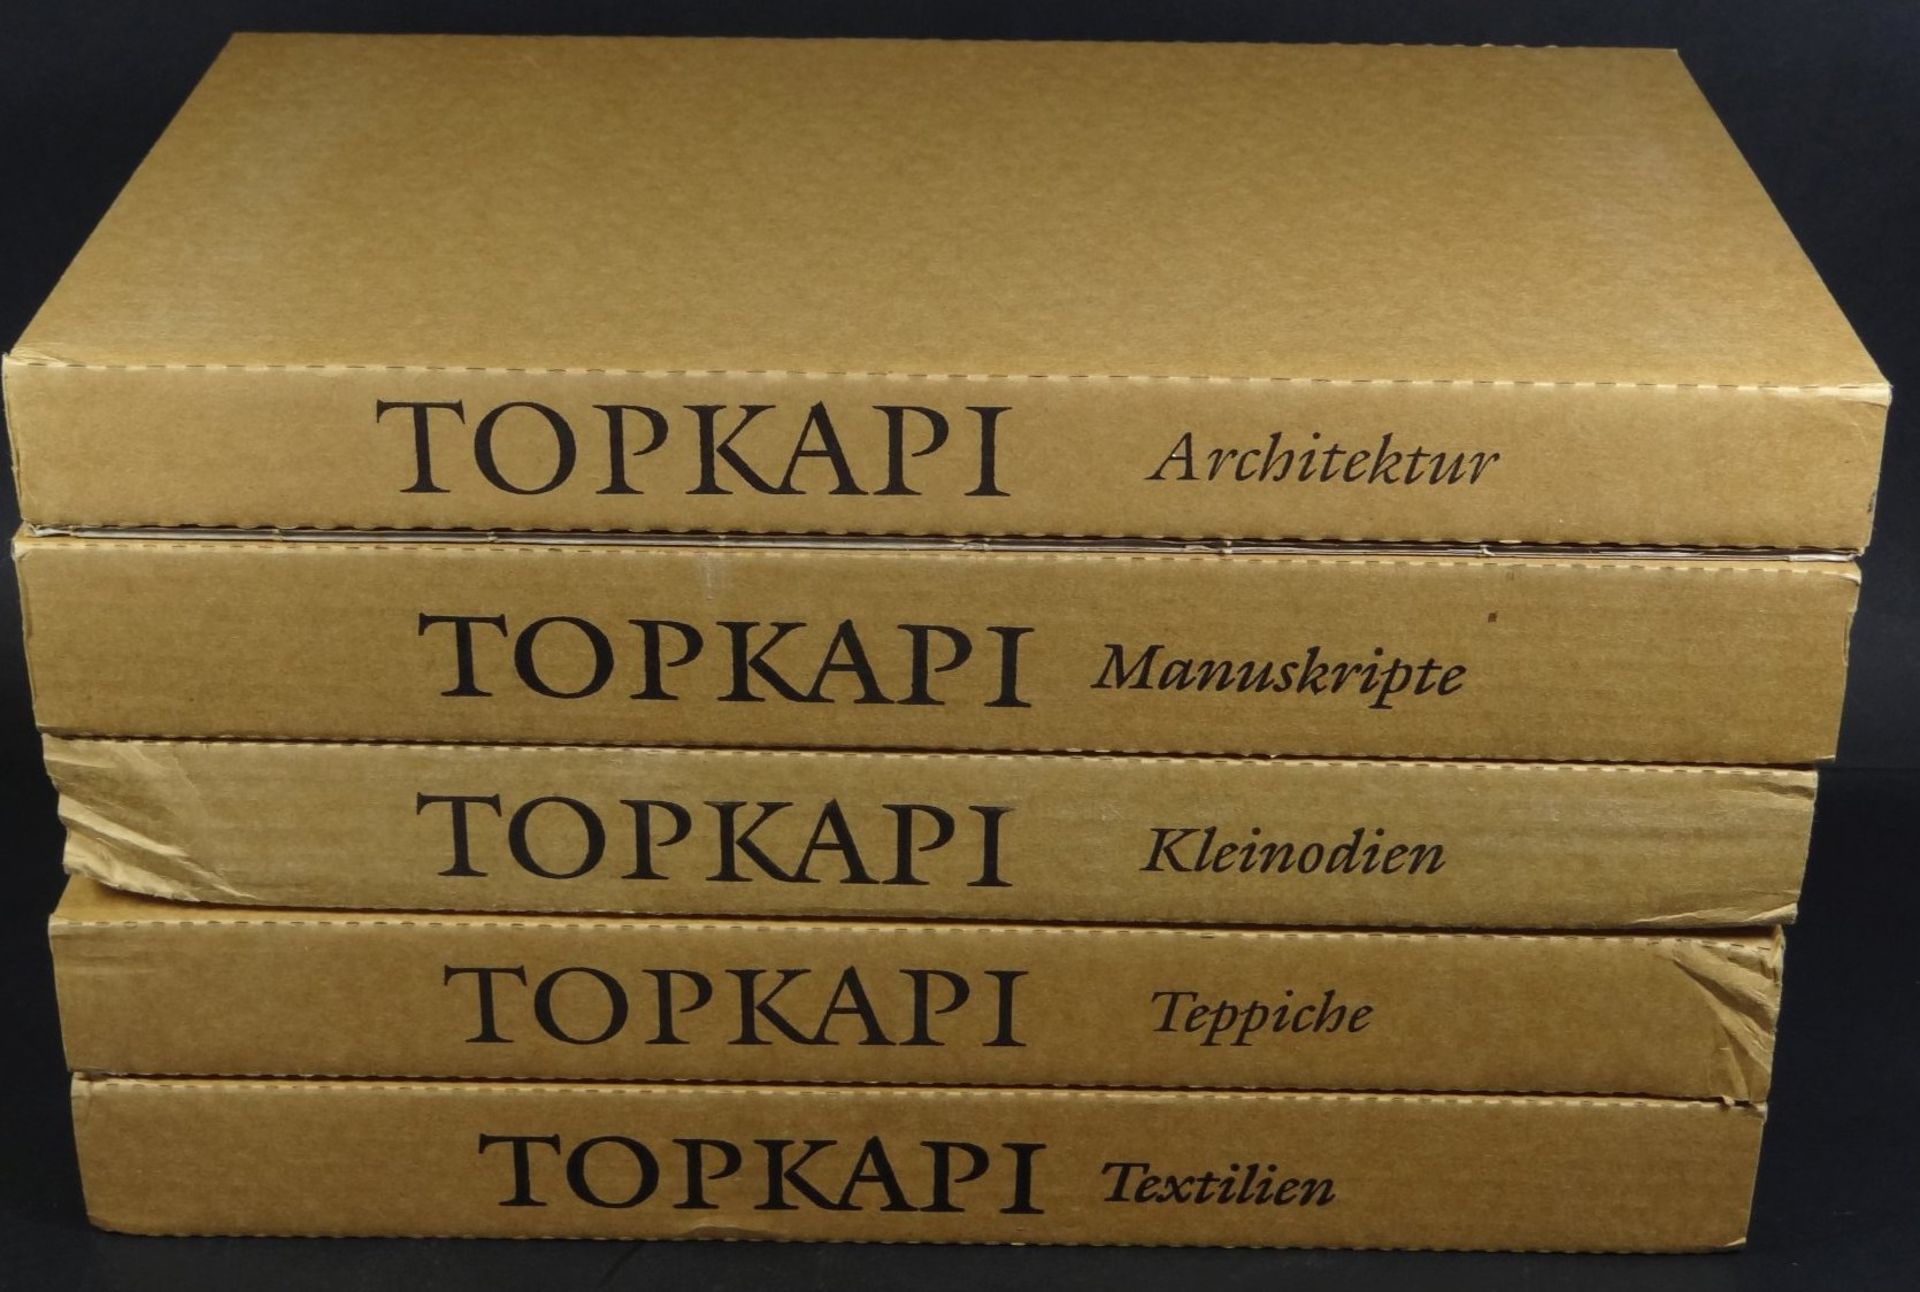 5x Bildbände über das Topkapi-Museum, in orig. Karton, je 38x24